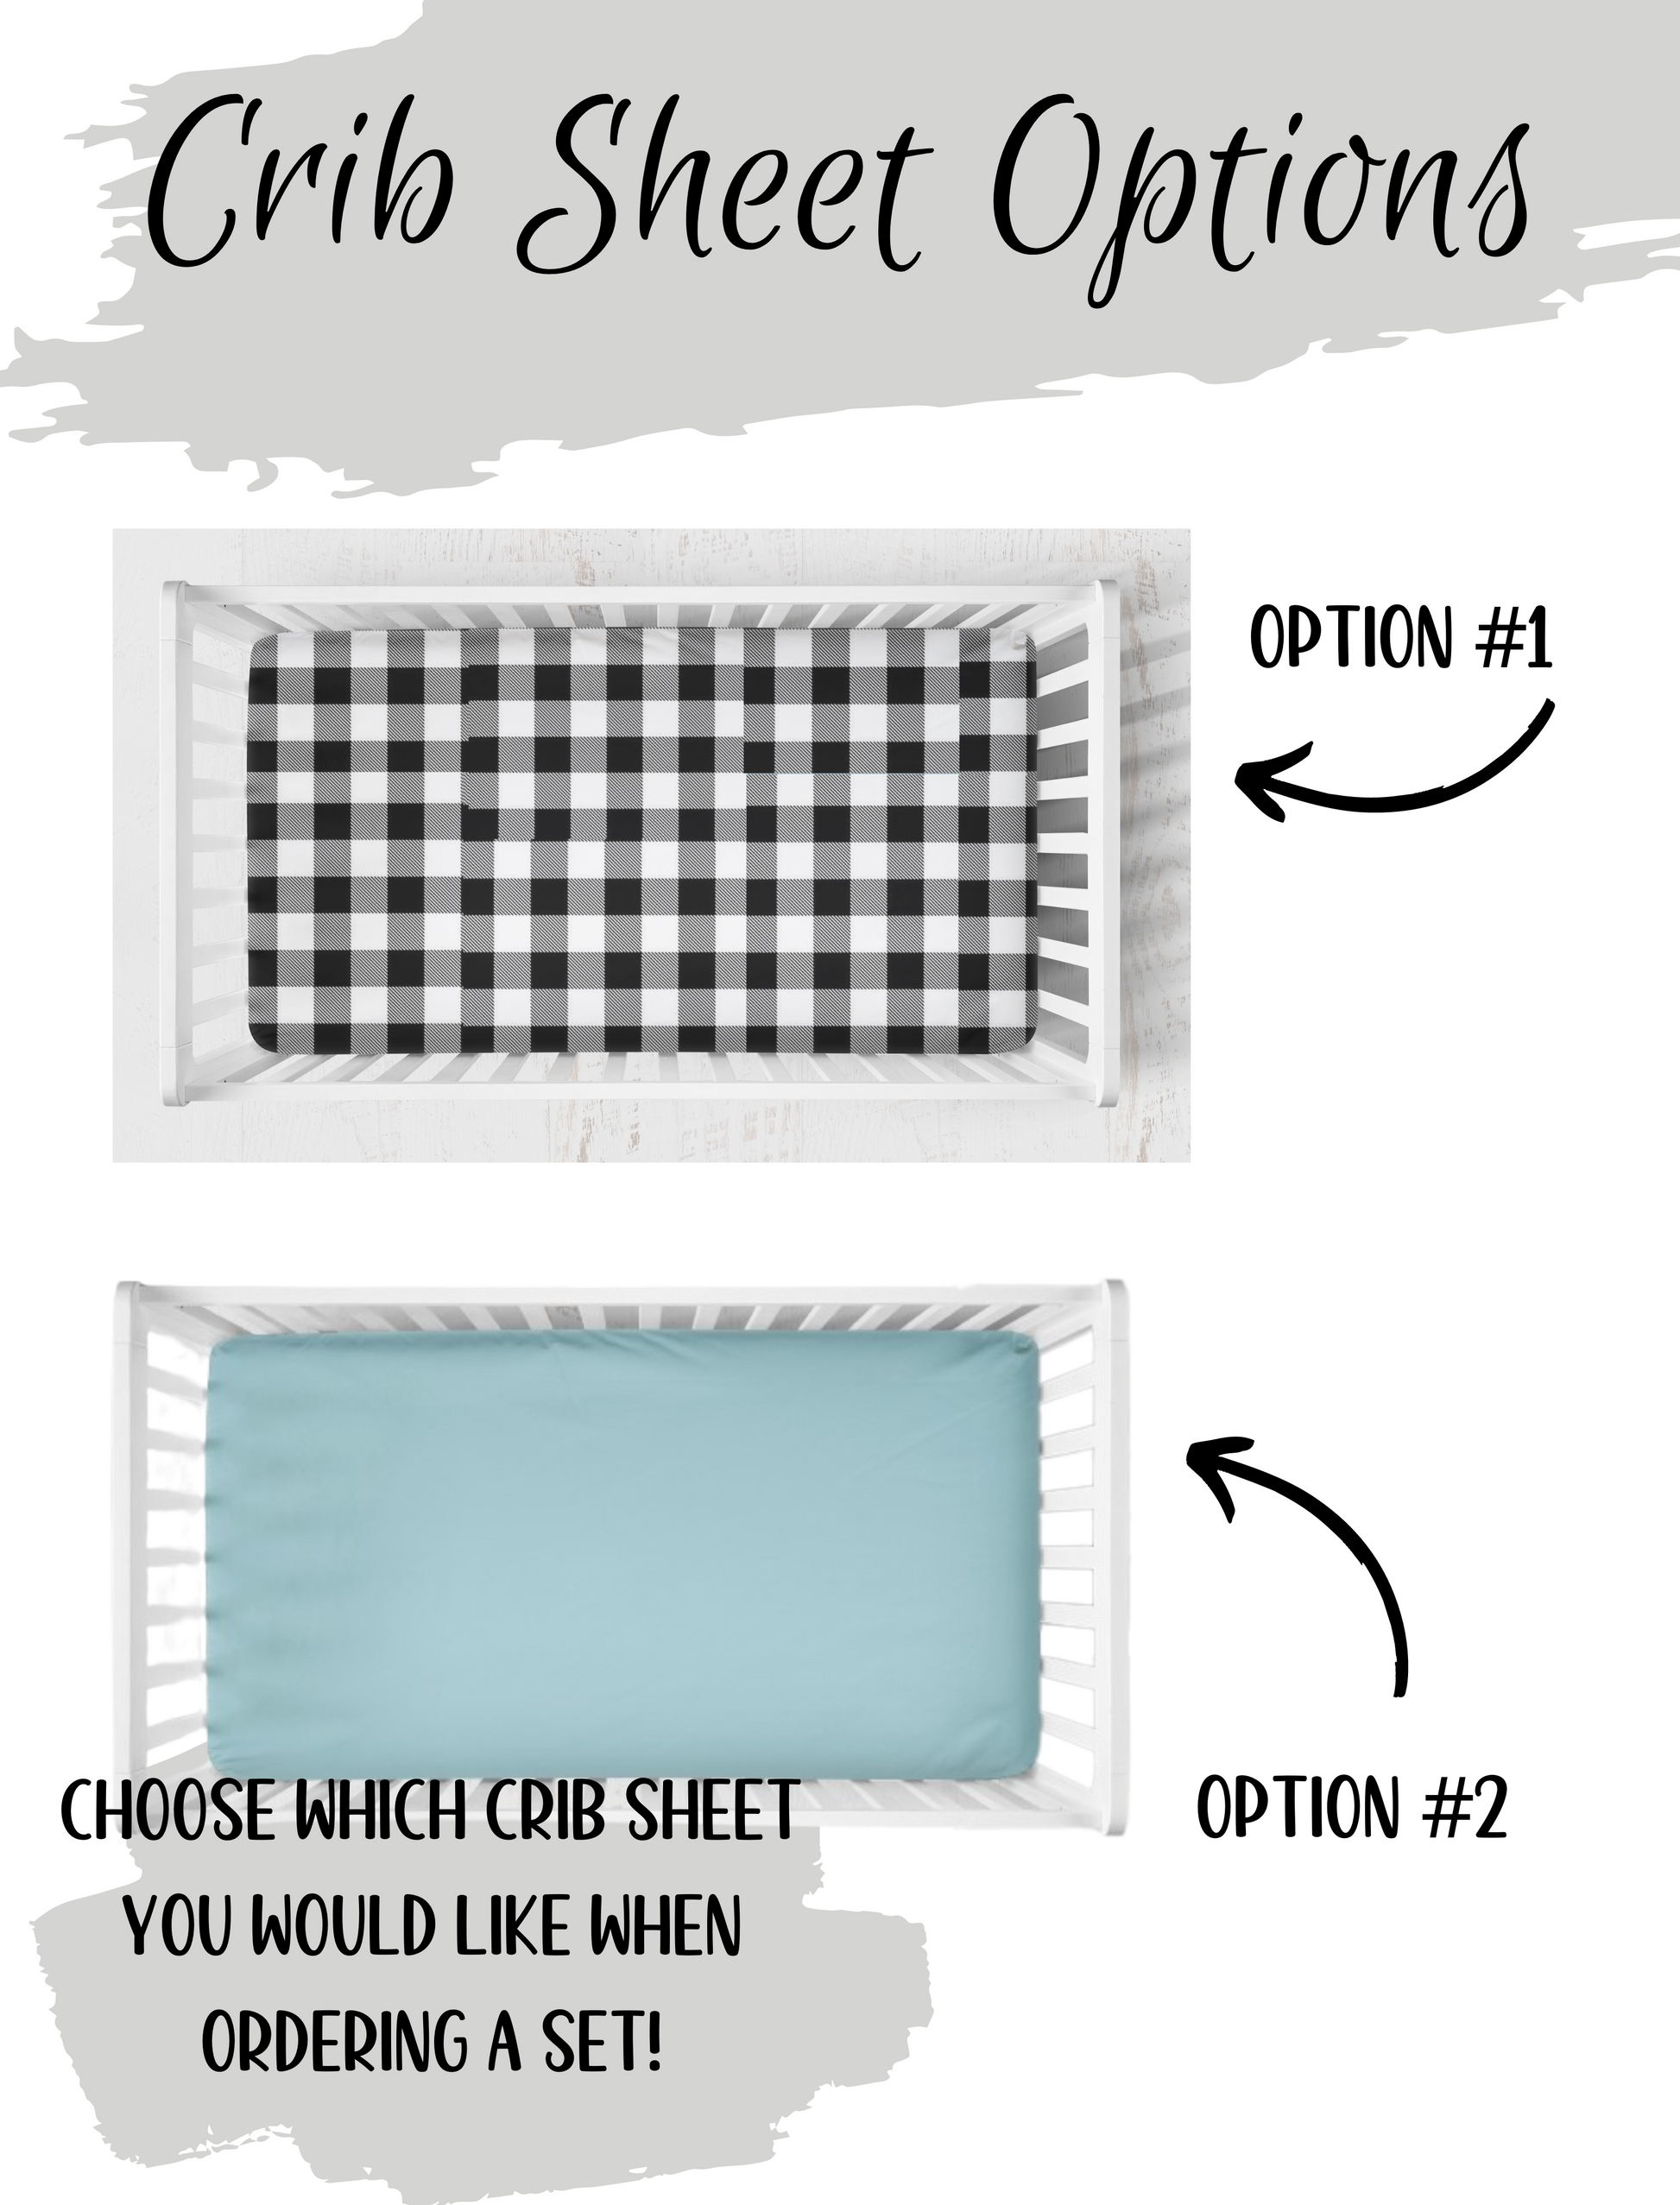 pick your crib sheet - black gingham crib sheet or aqua crib sheet.